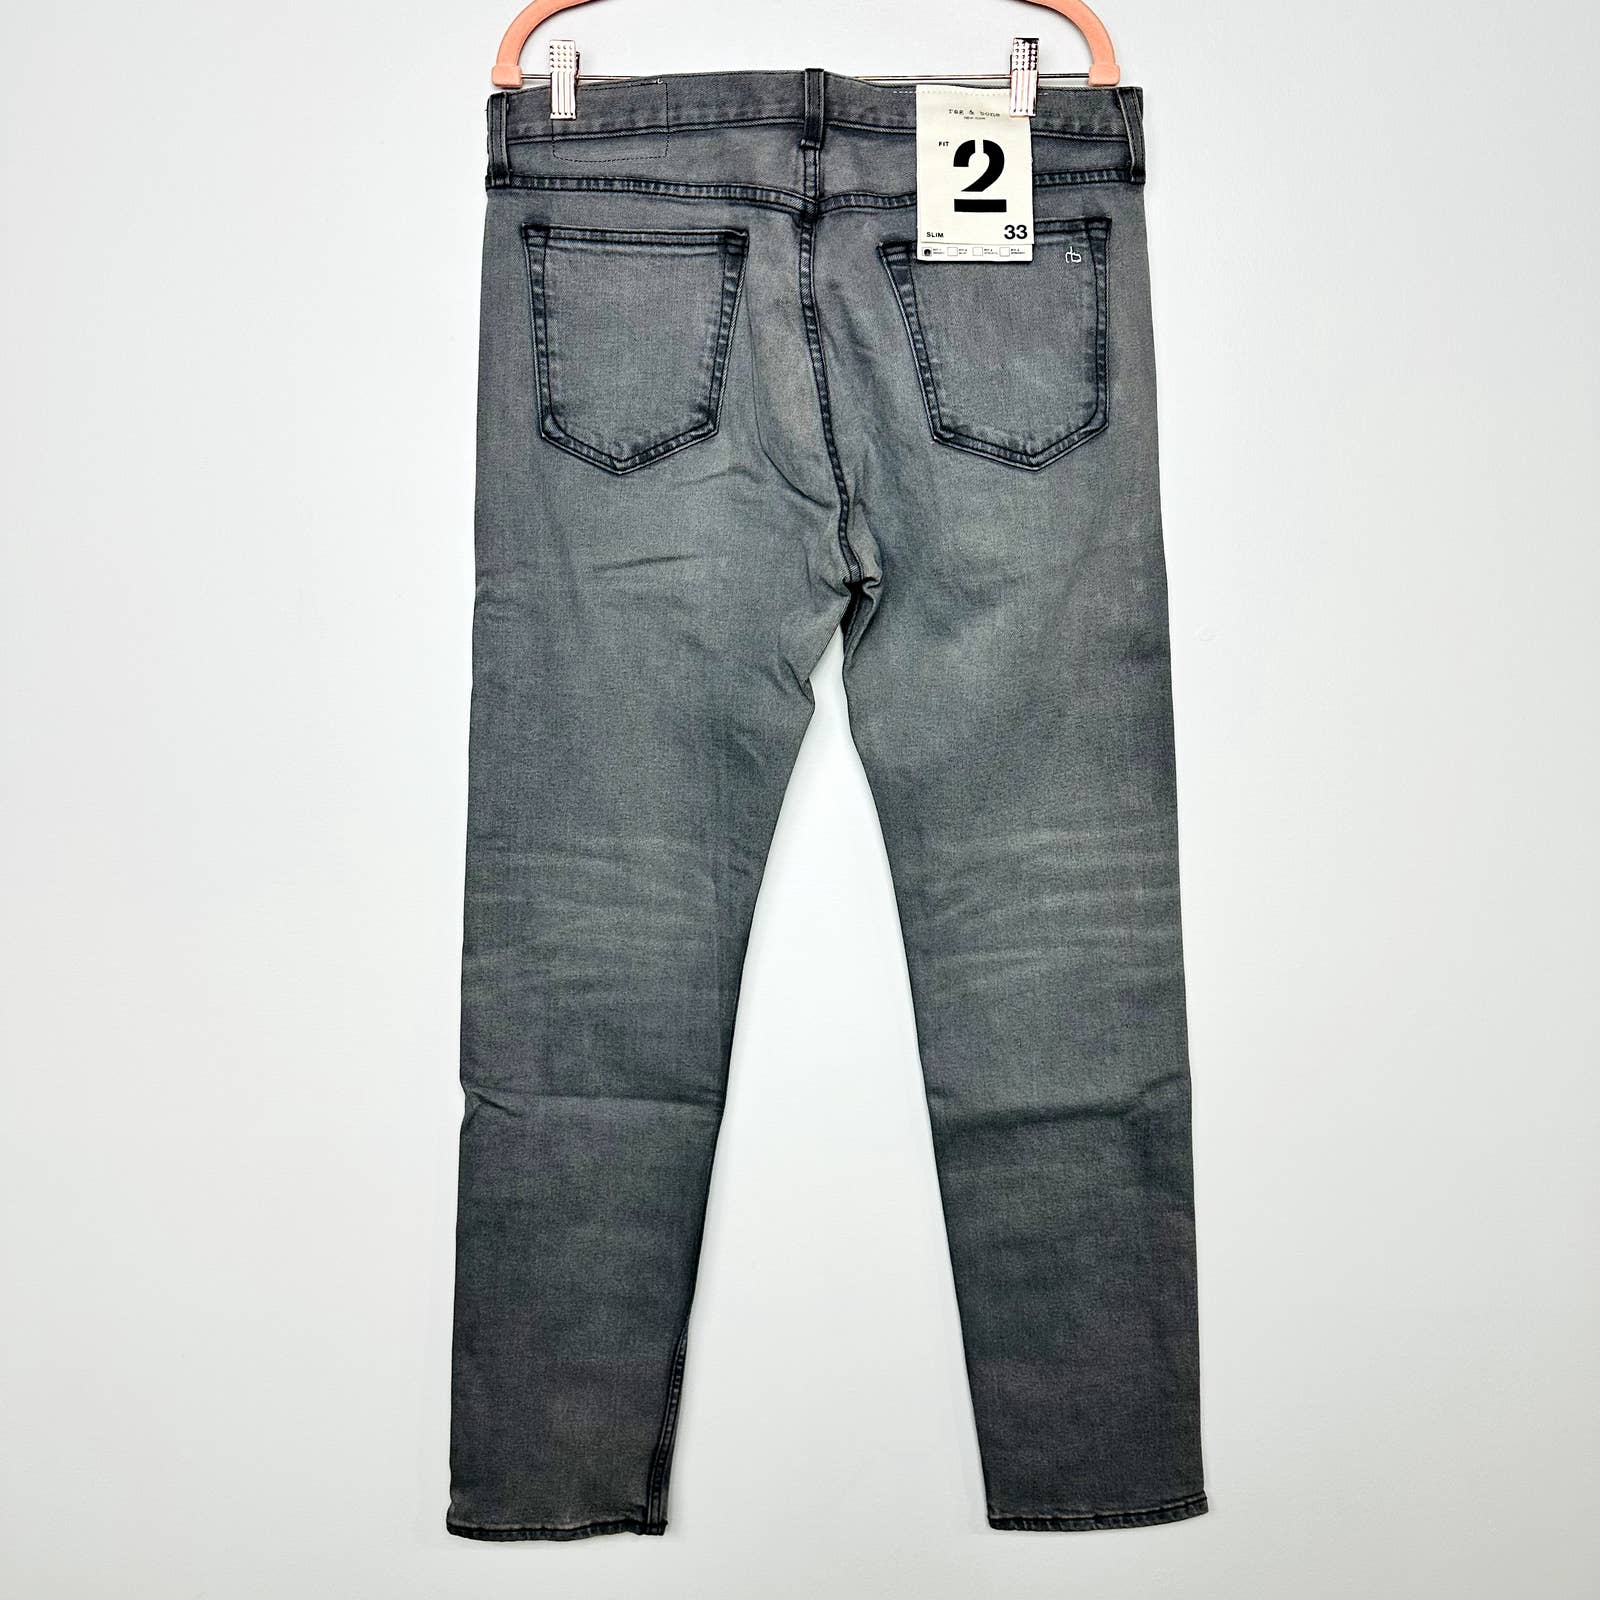 rag & bone NWT Fit 2 Slim Classic Button Fly Stretch Denim Jeans Greyson Size 33